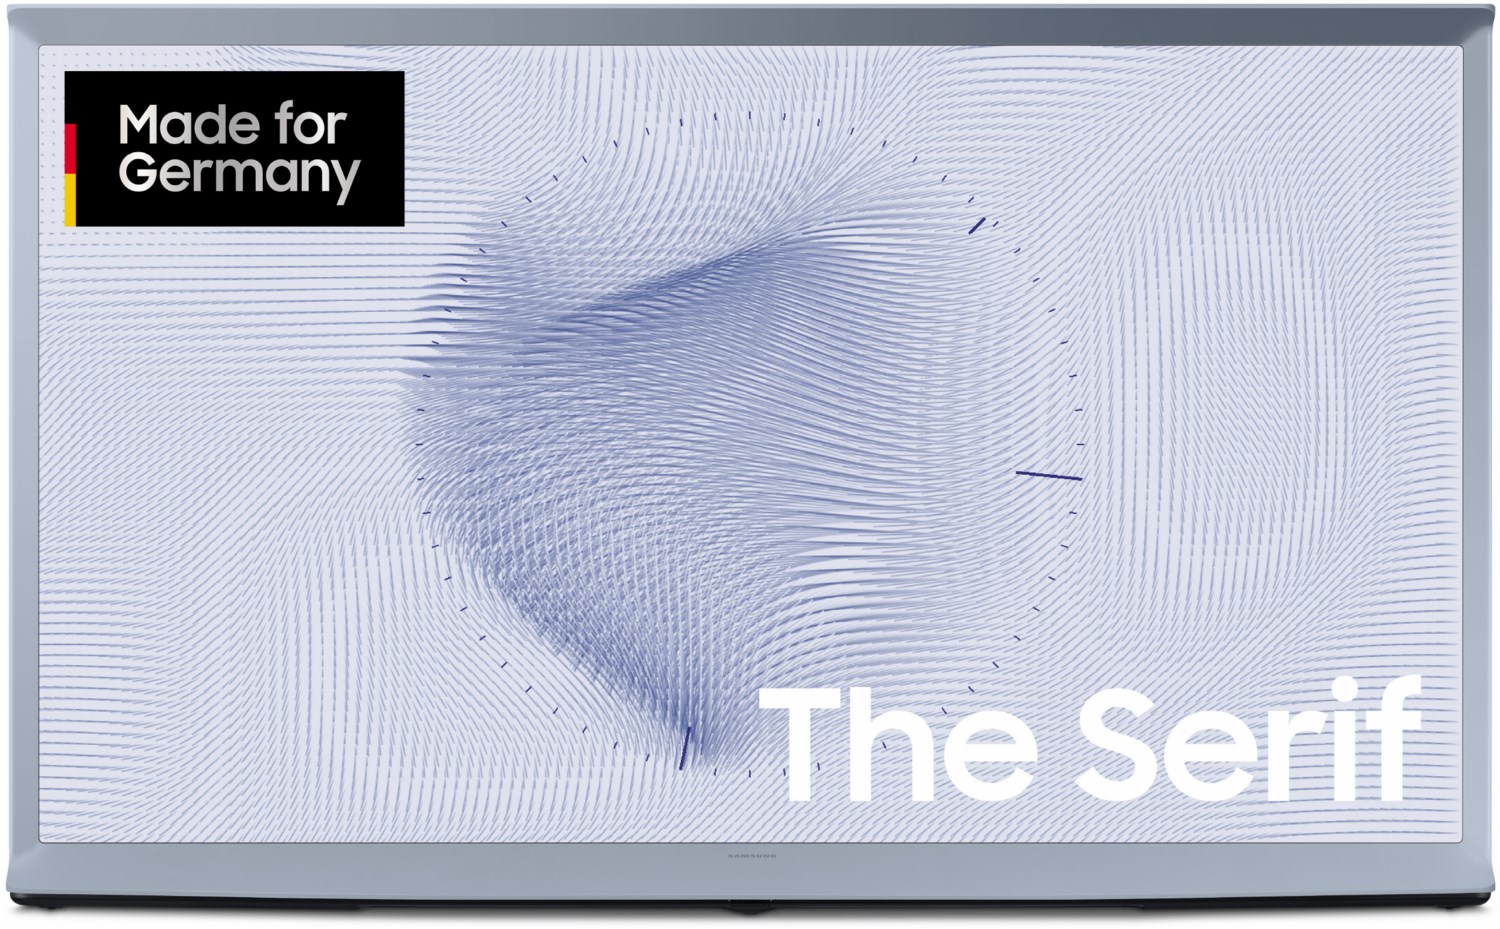 Samsung The Serif QLED-TV 50 Zoll (125 cm) Cotton Blue